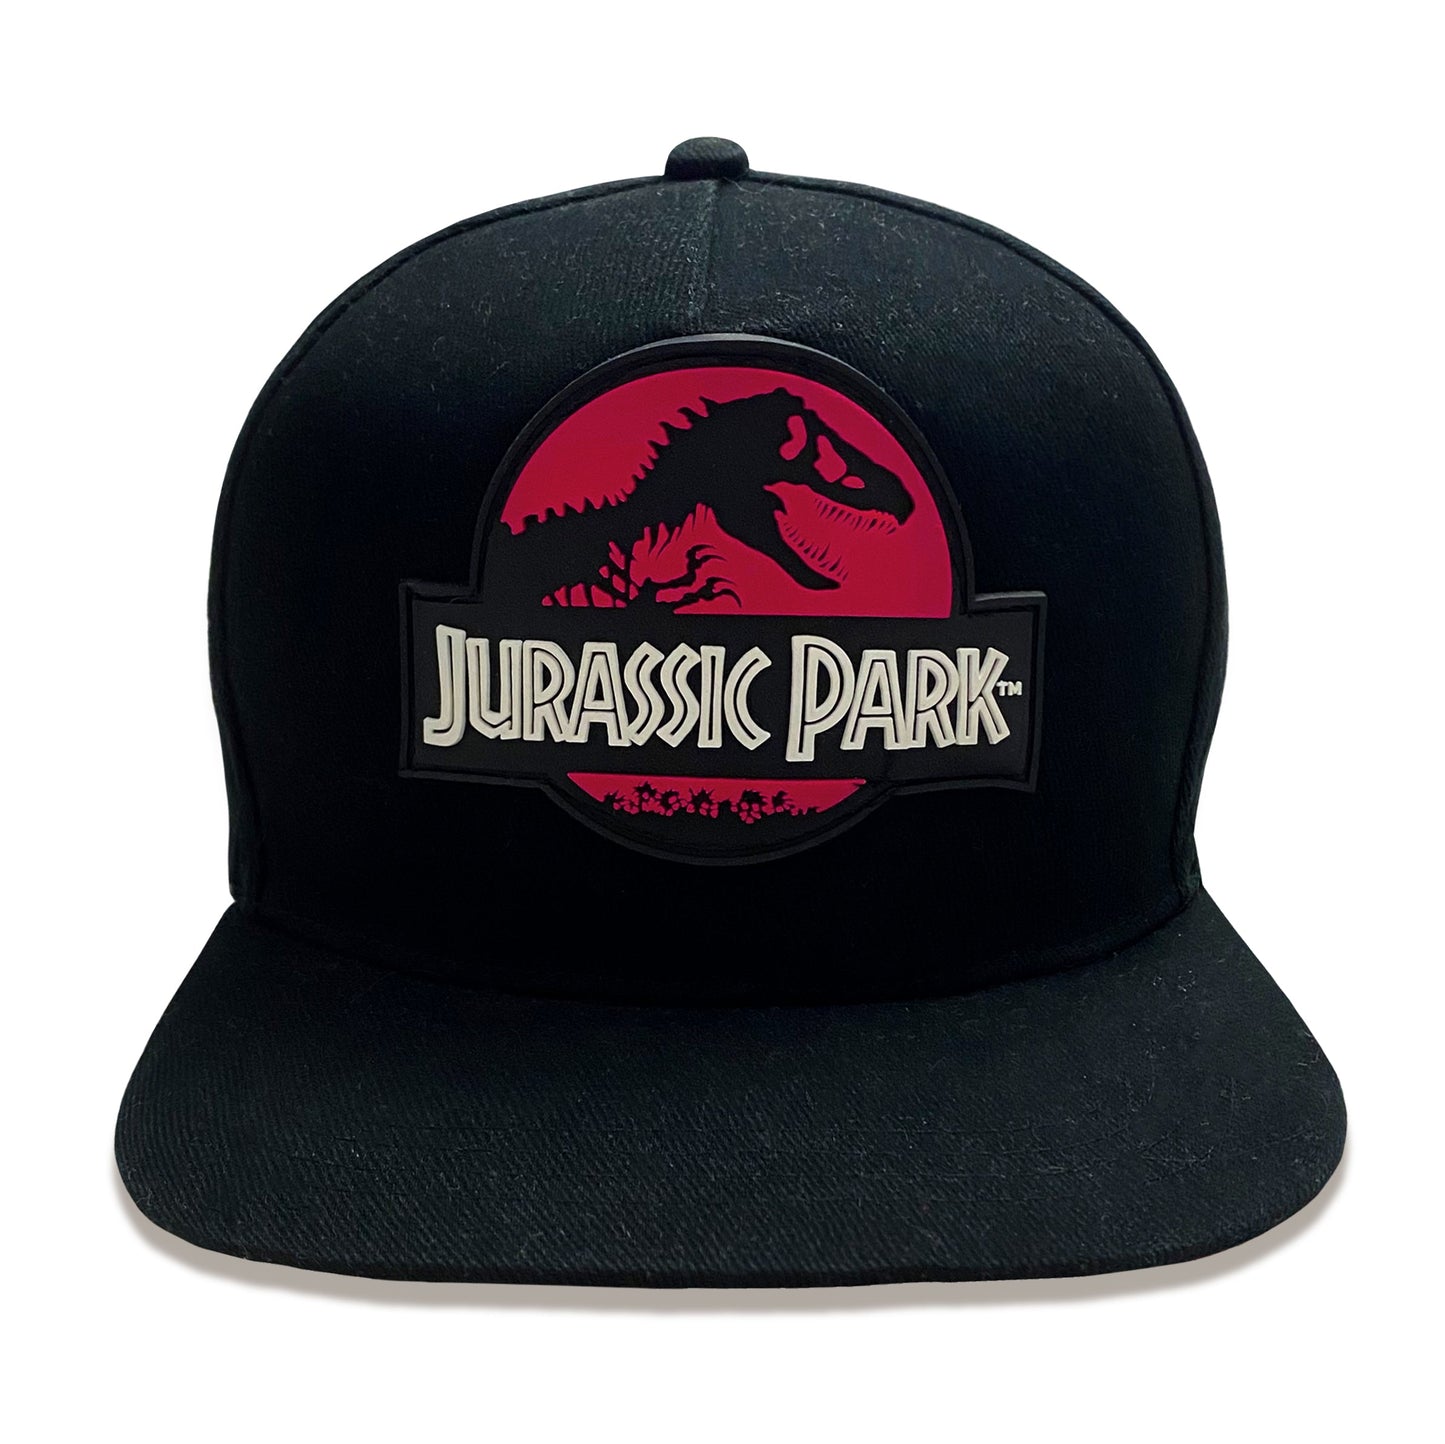 Jurassic Park Red Logo Rubber Badge Unisex Adults Snapback Cap